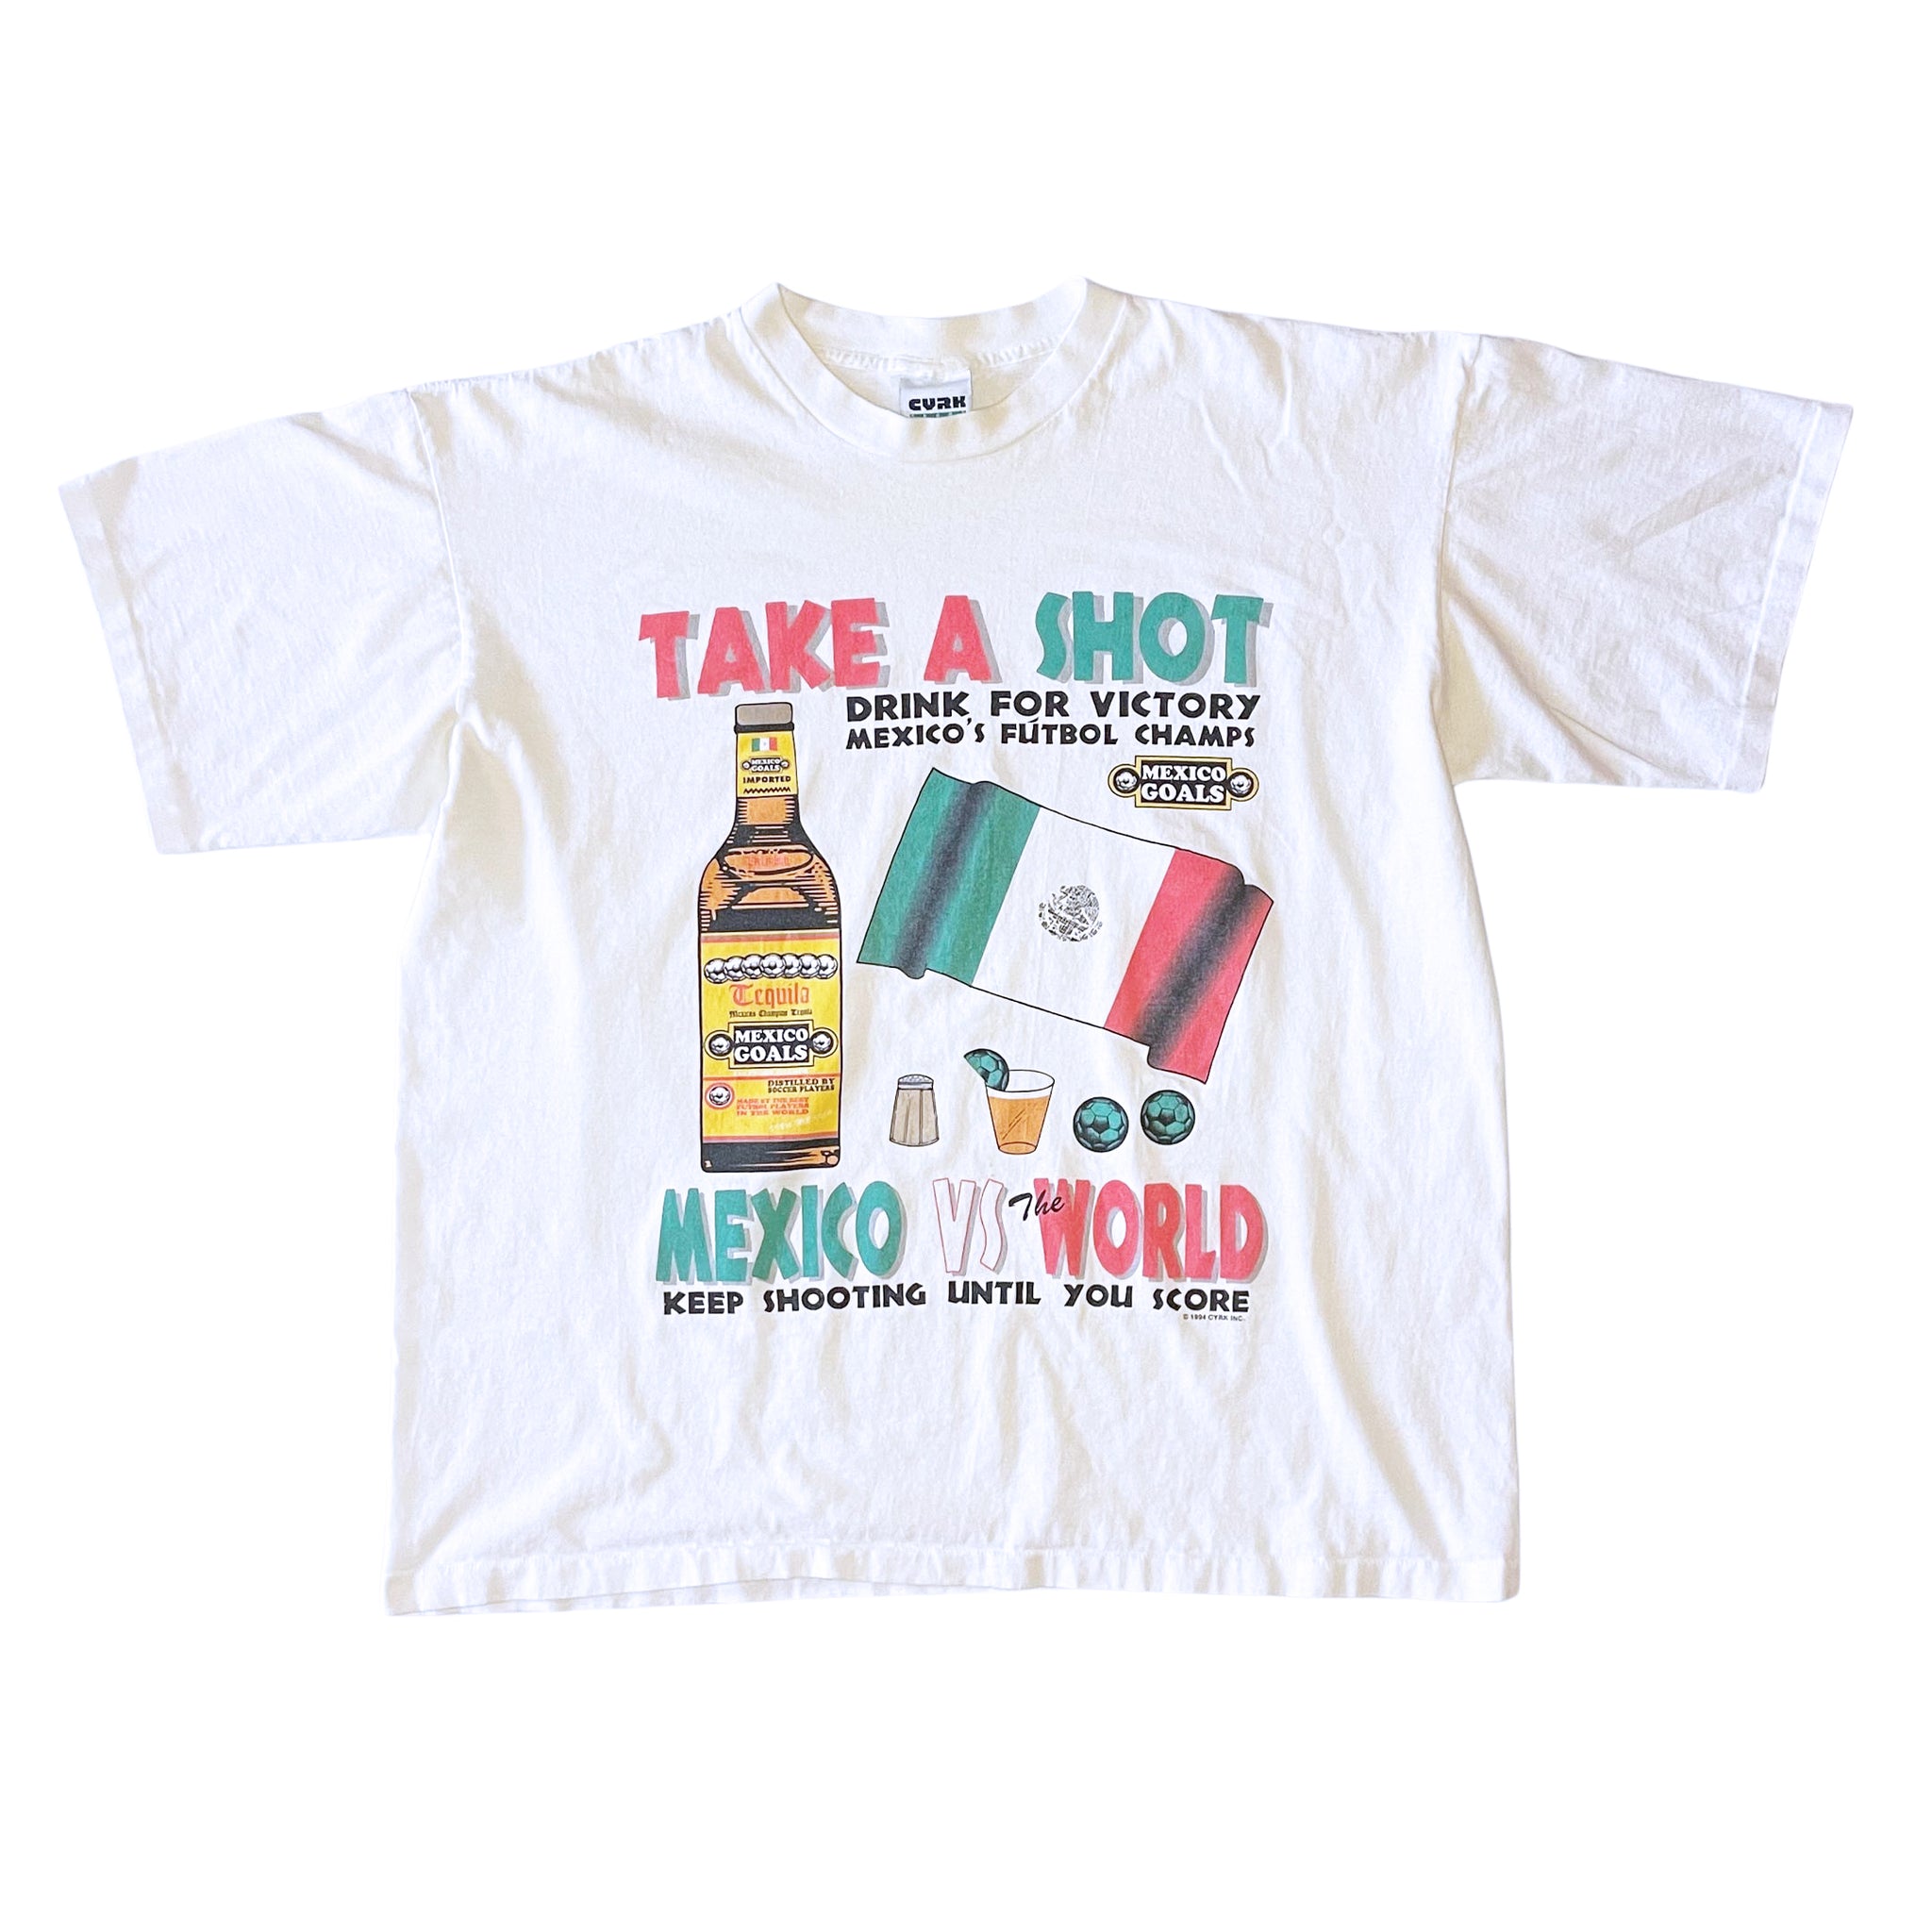 CYRK Mexico "Shots" T-Shirt XL